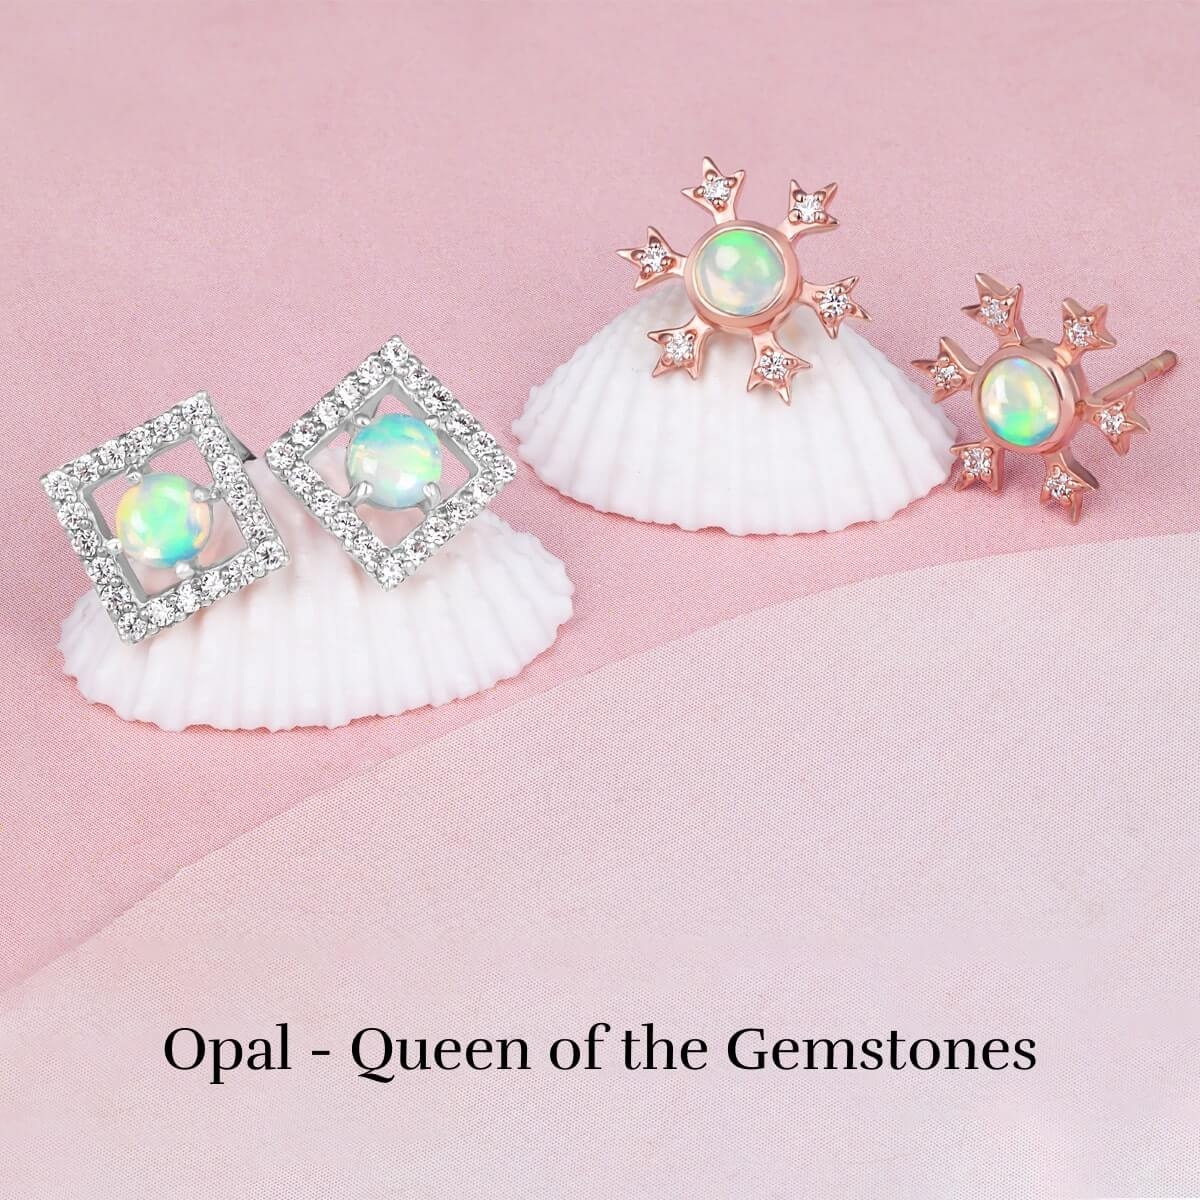 Healing properties and benefits of opal